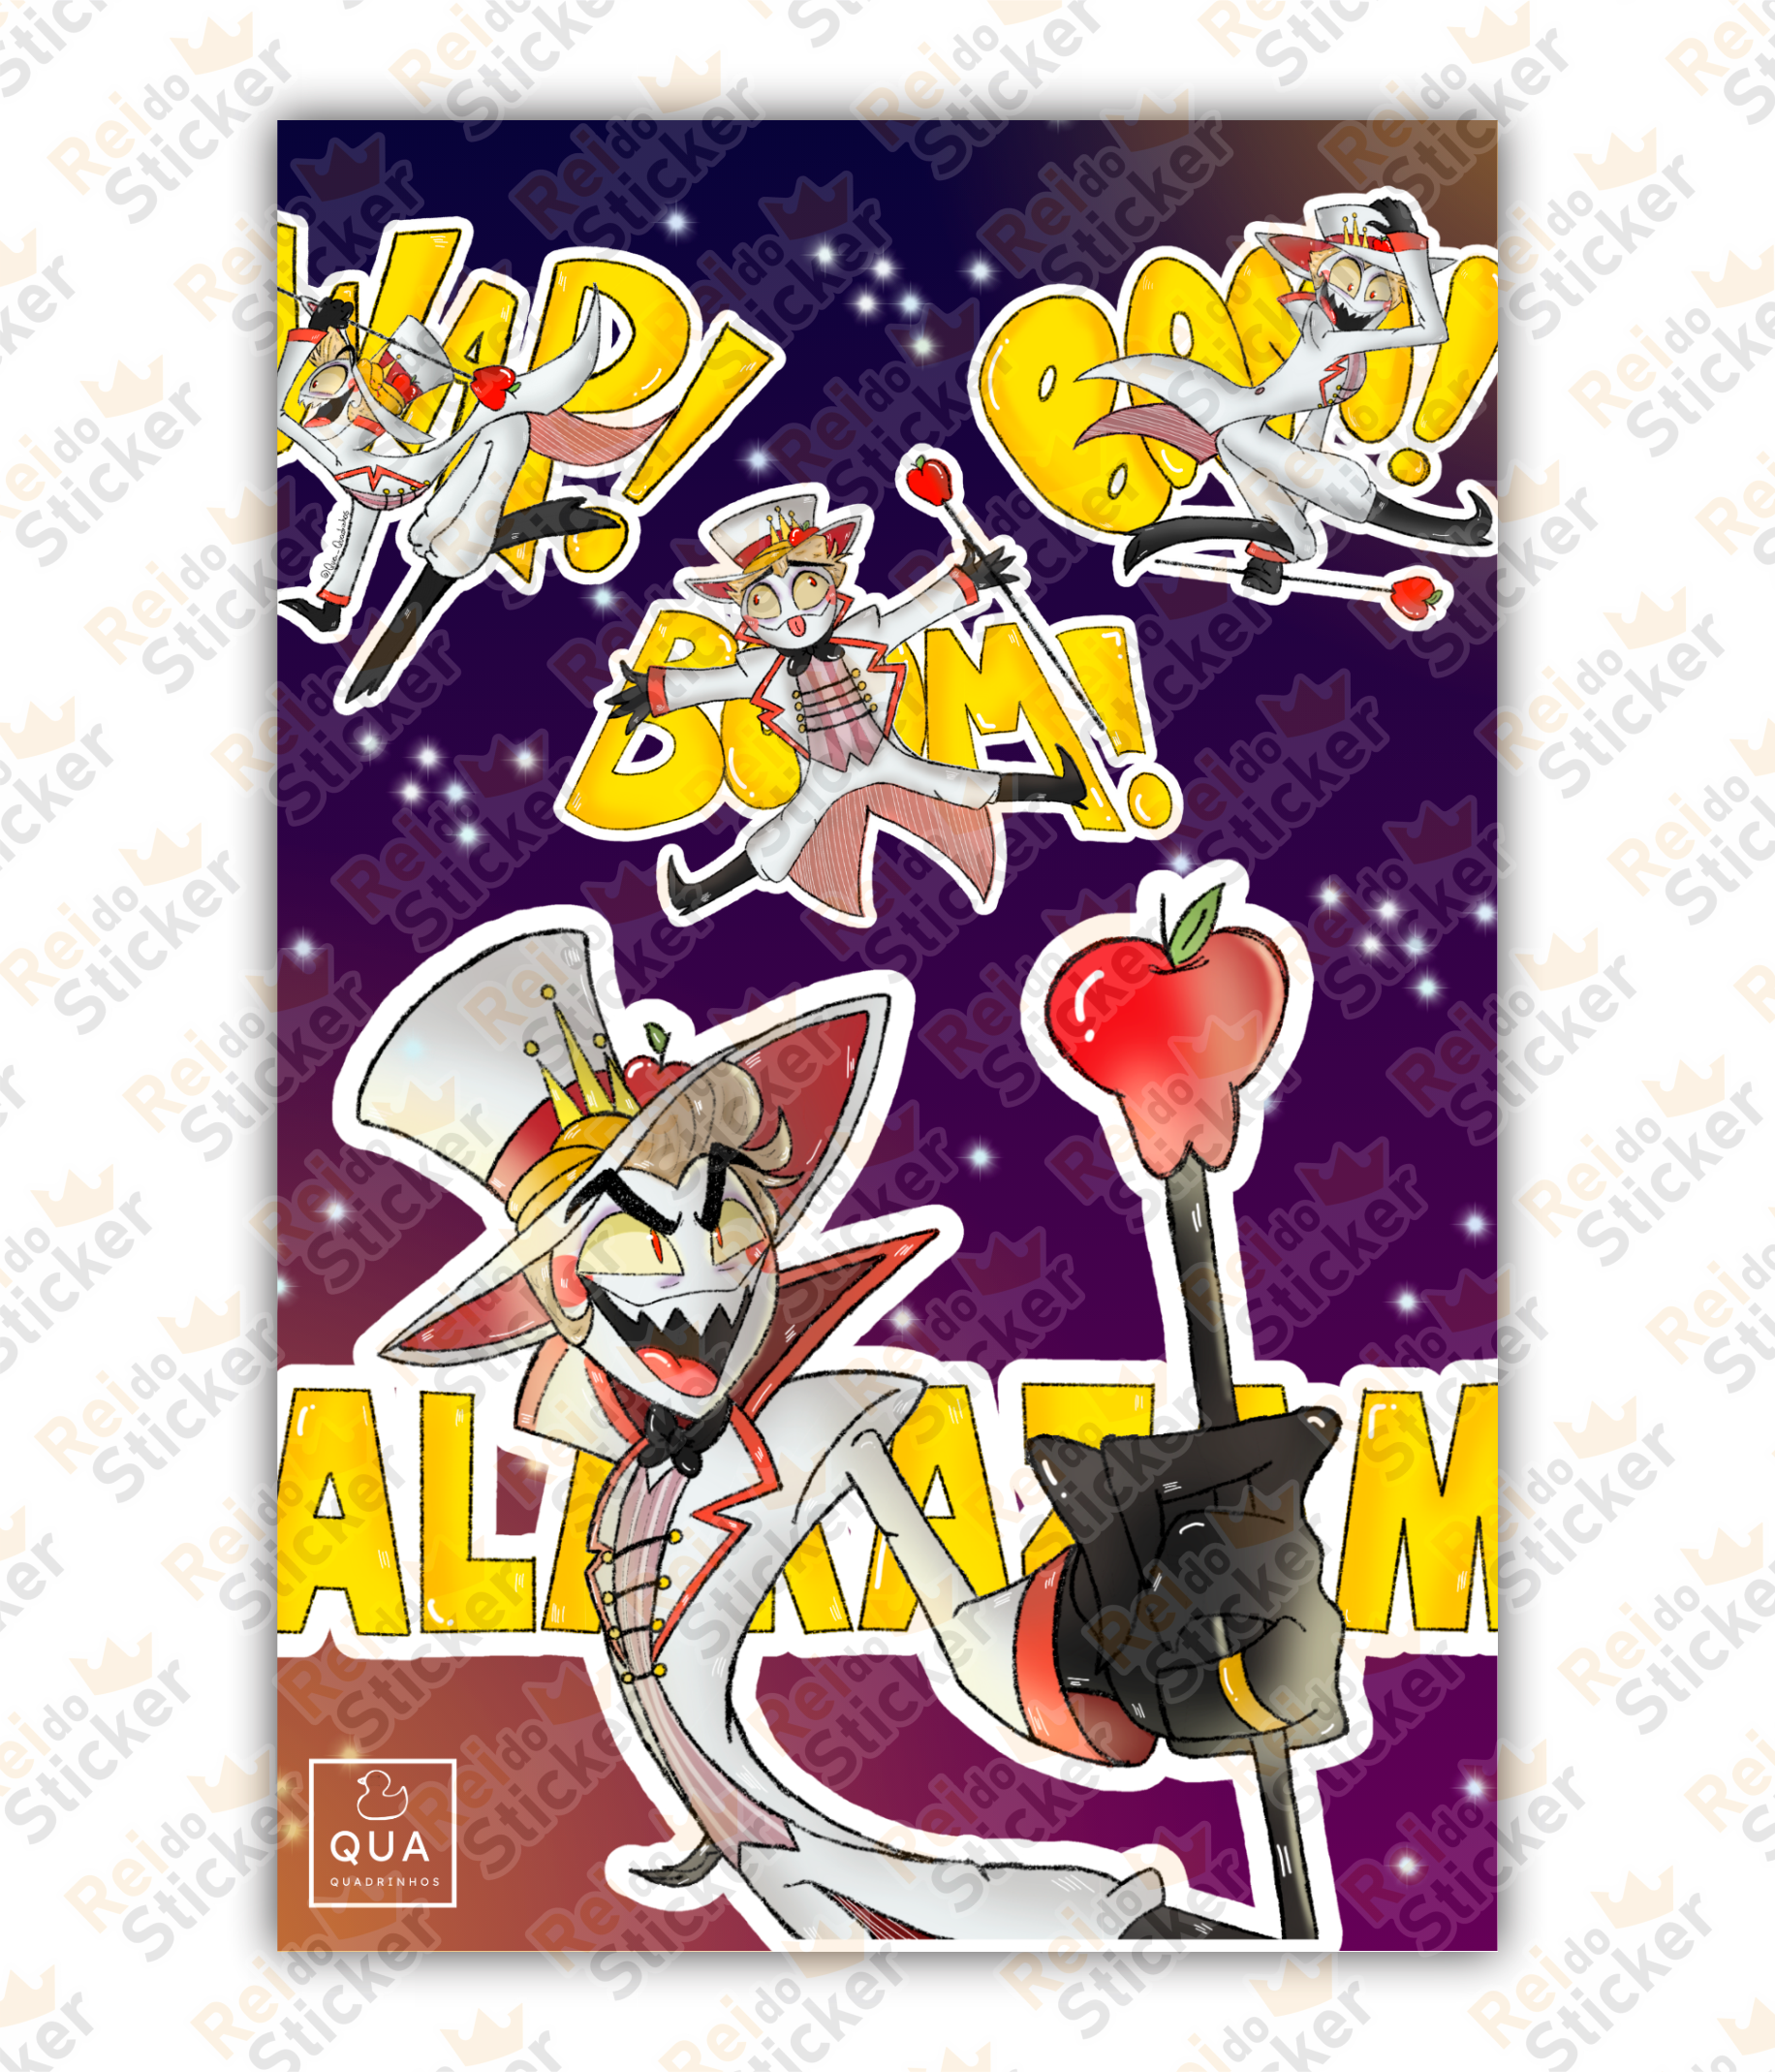 Lucifer - Wap bam boom Alakazam